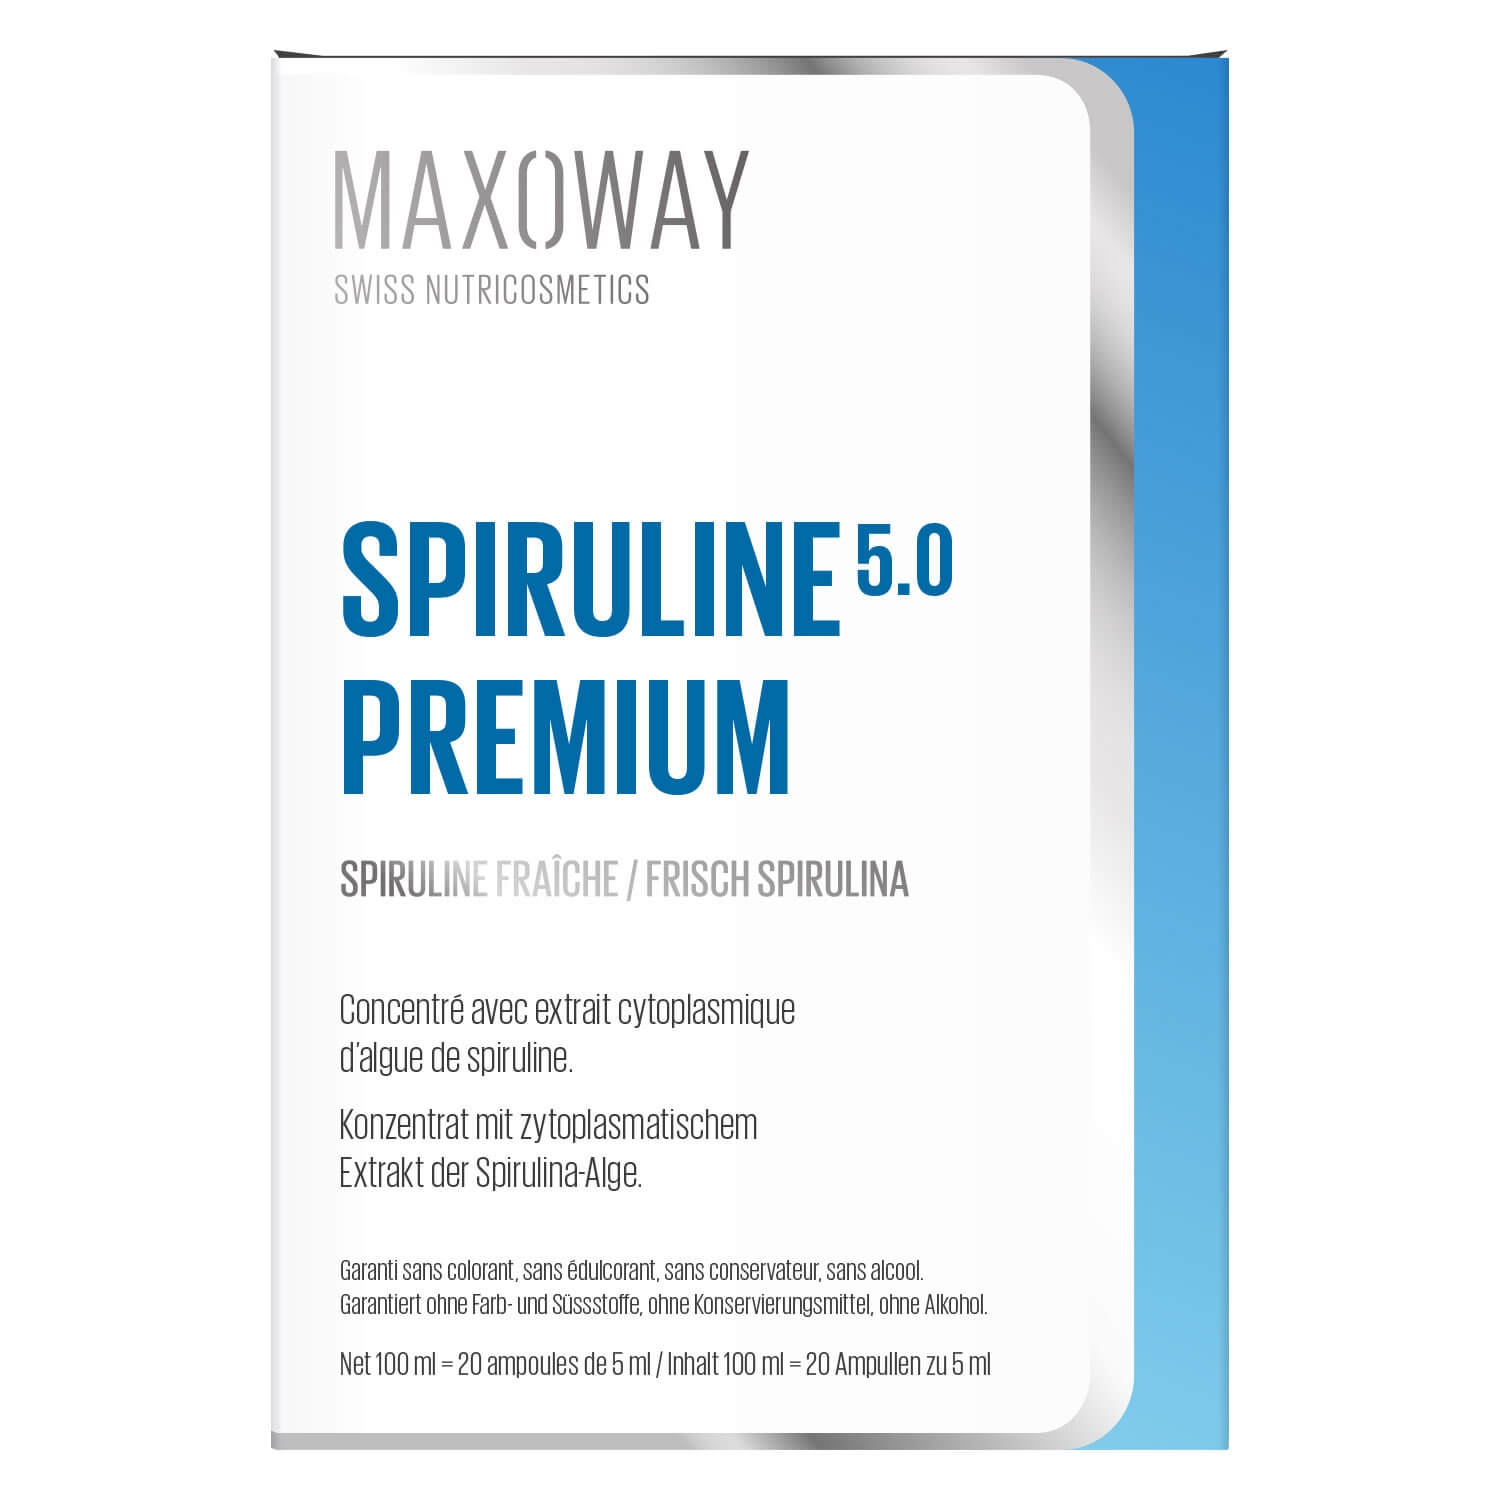 Product image from Maxoway - Spiruline 5.0 Premium